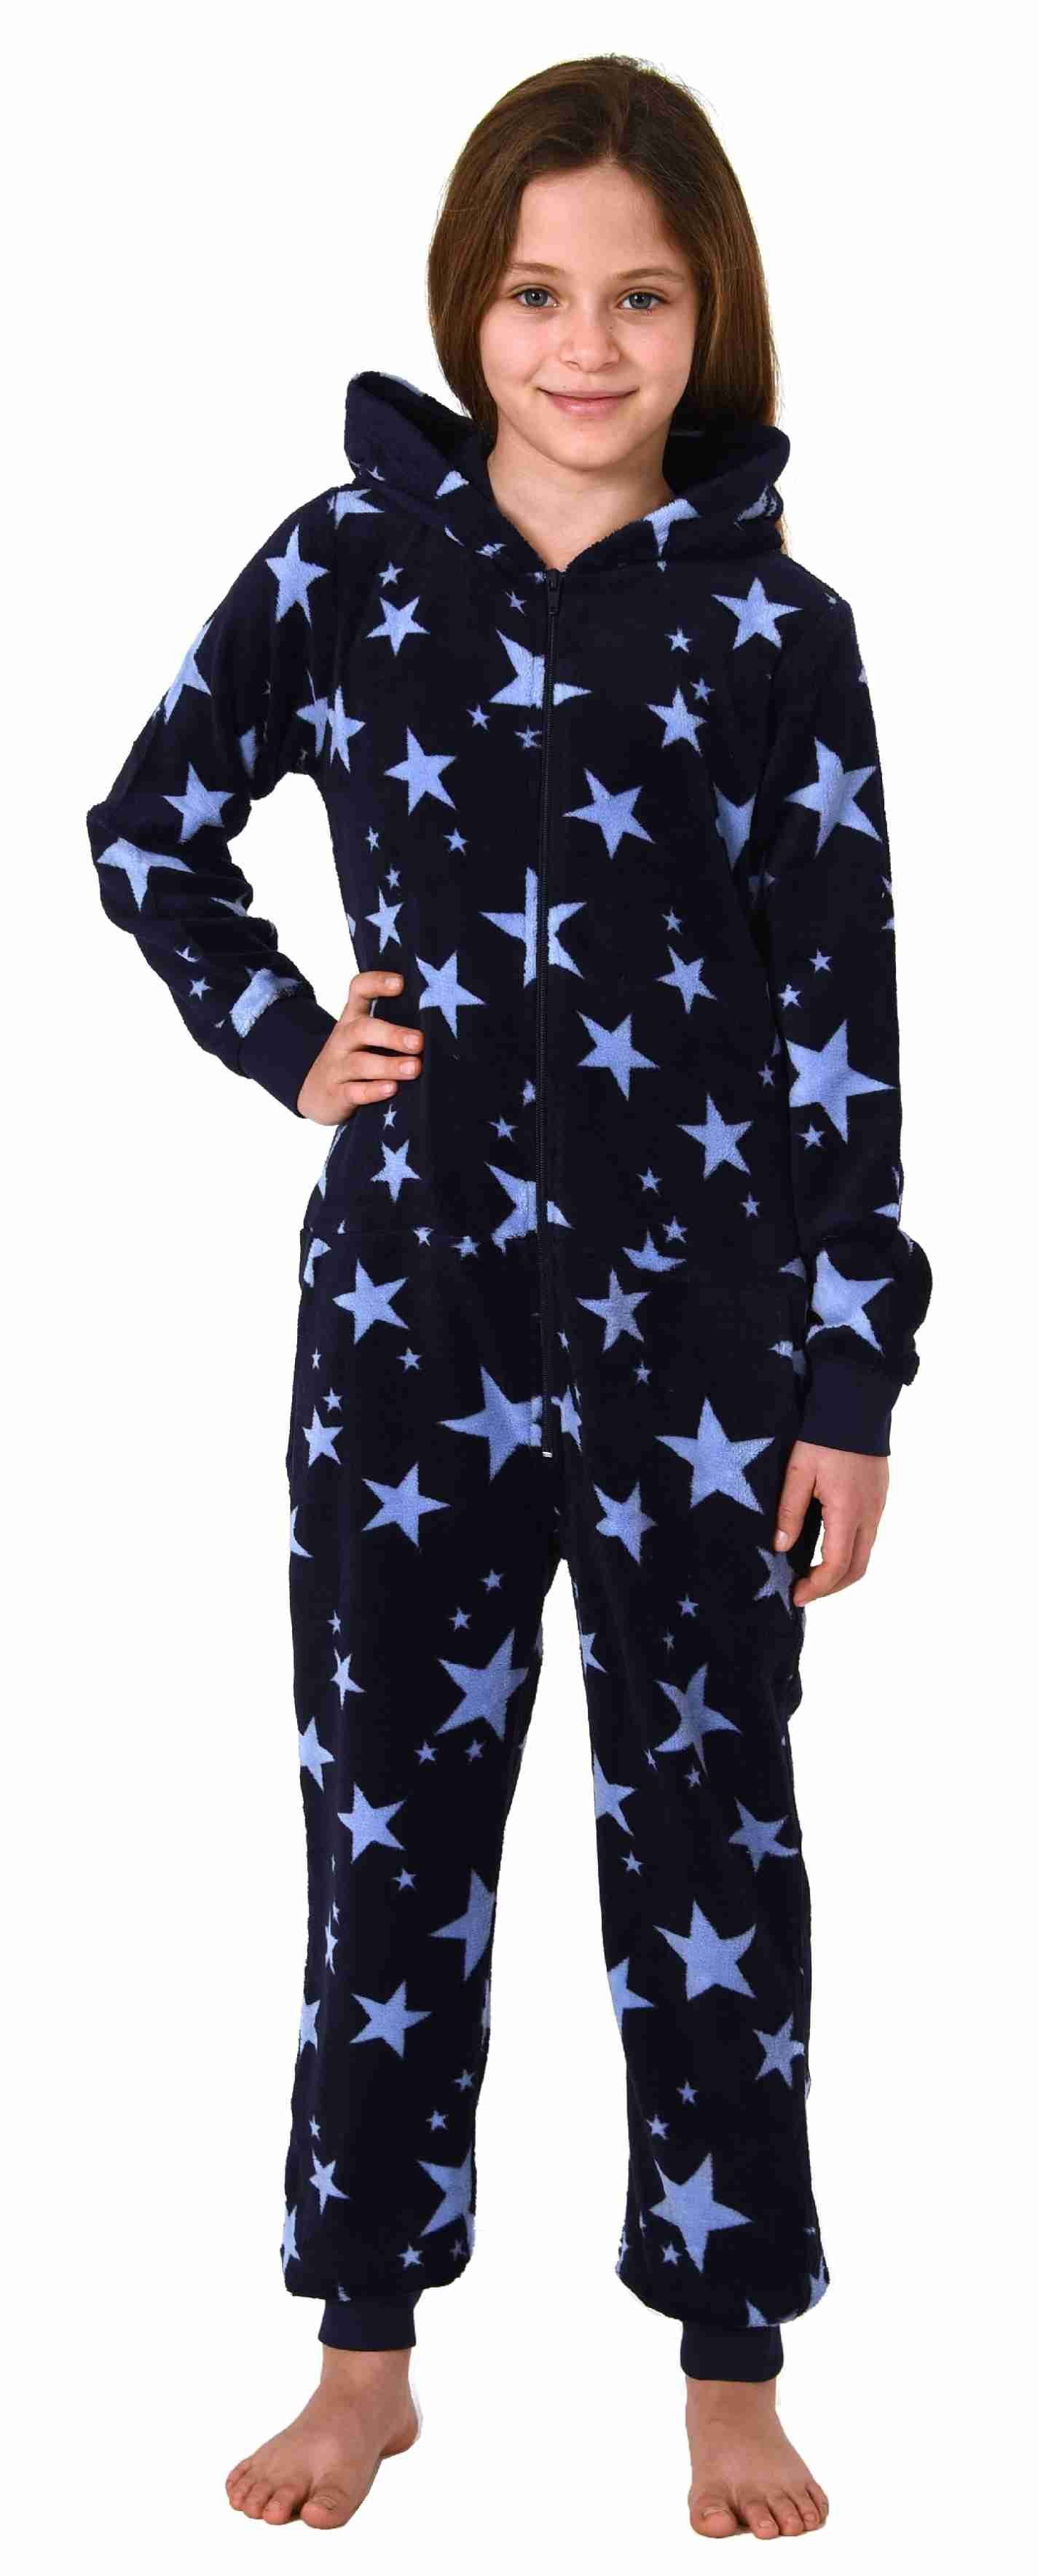 Normann Pyjama Mädchen Jumpsuit Overall Schlafanzug Pyjama langarm in  Sterne Optik - 202 467 97 961